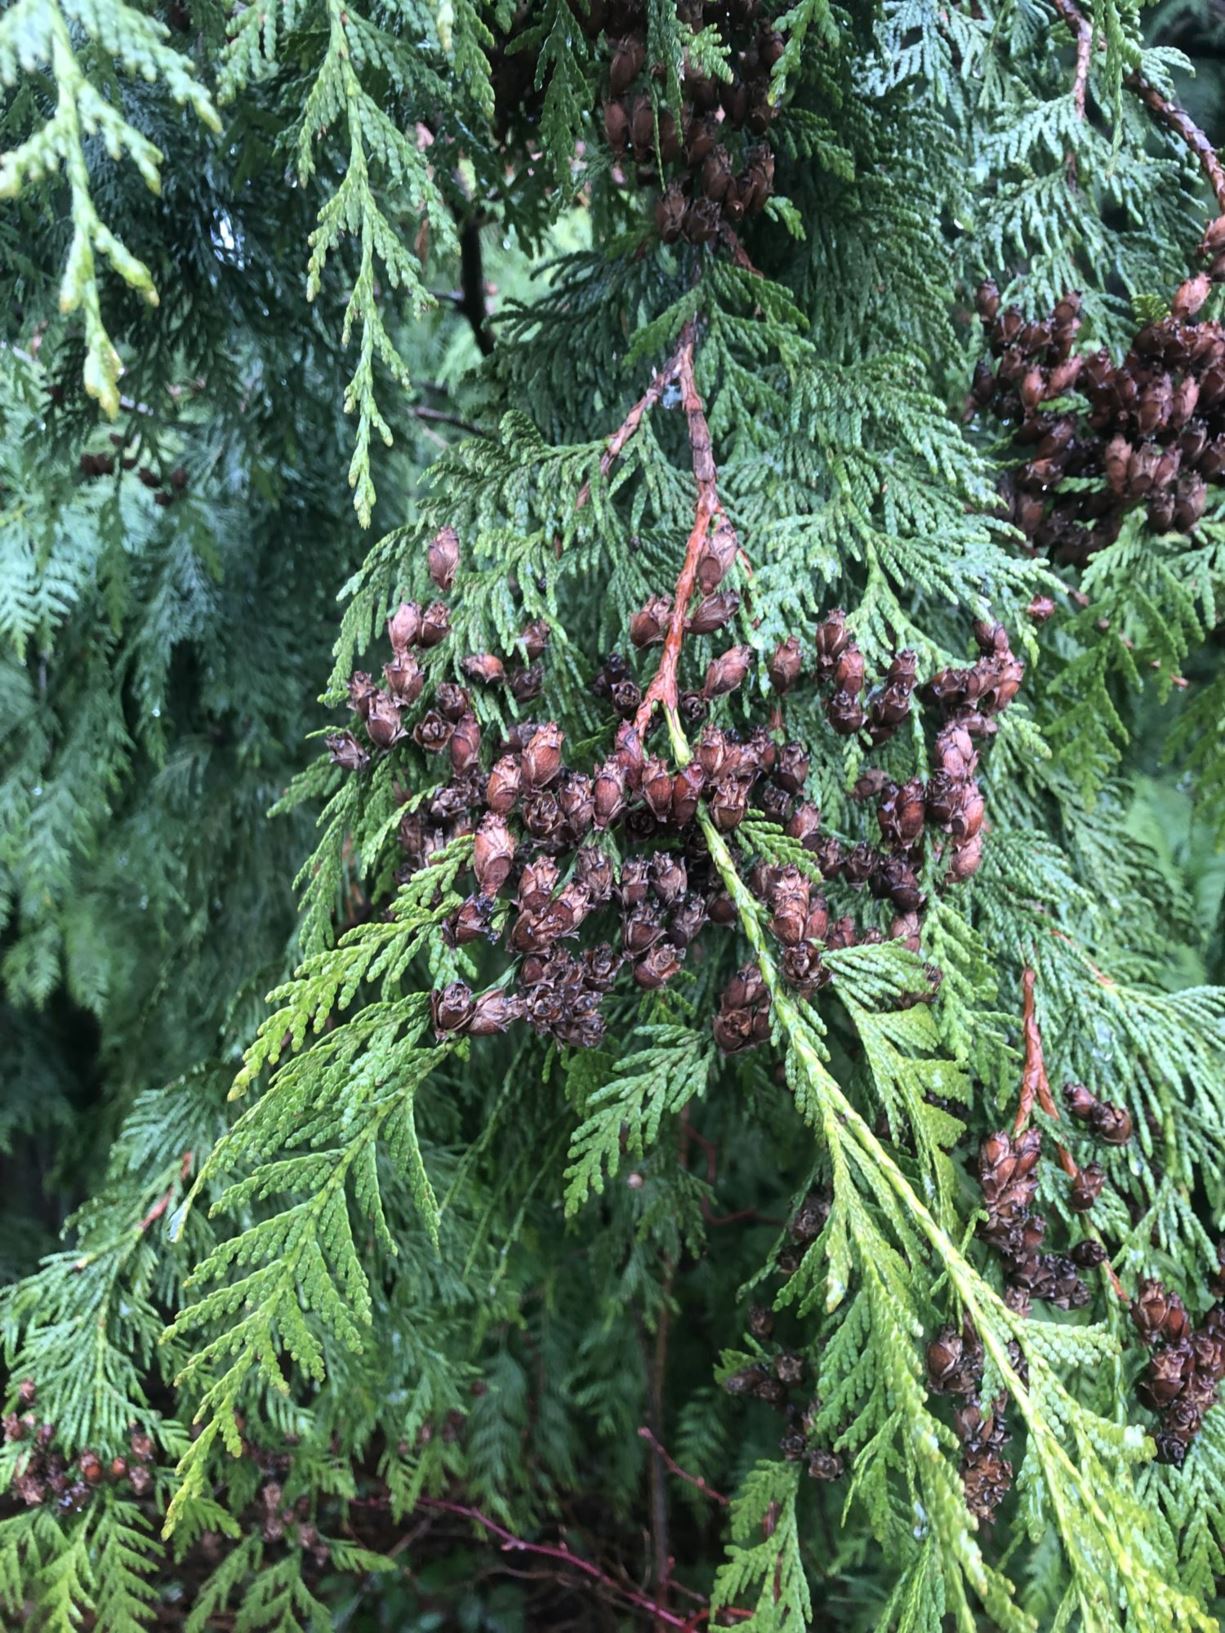 Thuja plicata - Pacific red-cedar, western red cedar